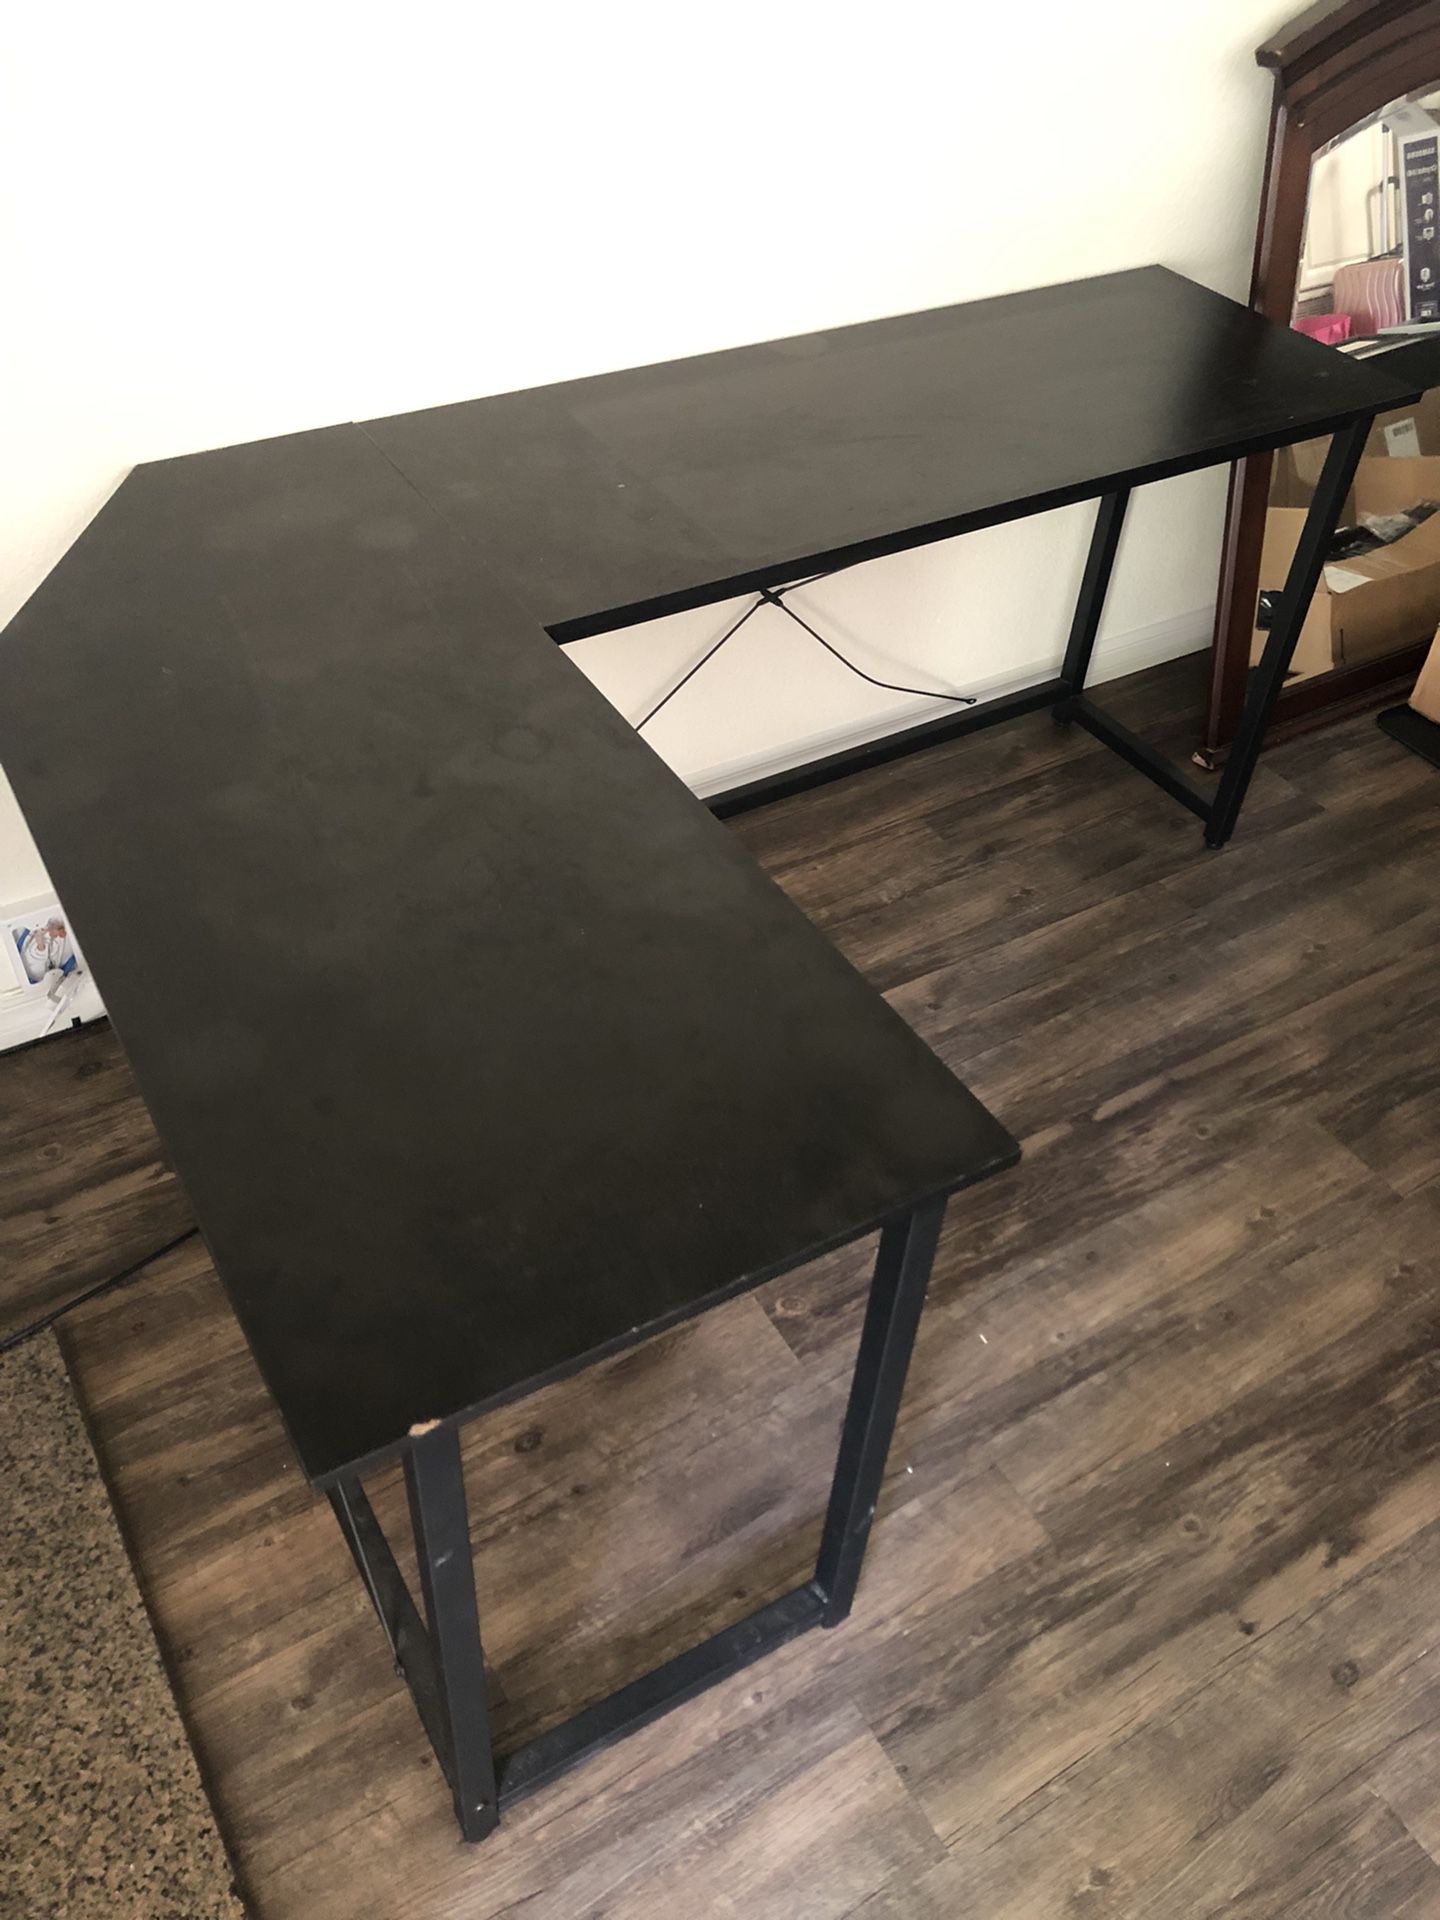 Coleshome 66” L-Shaped Desk